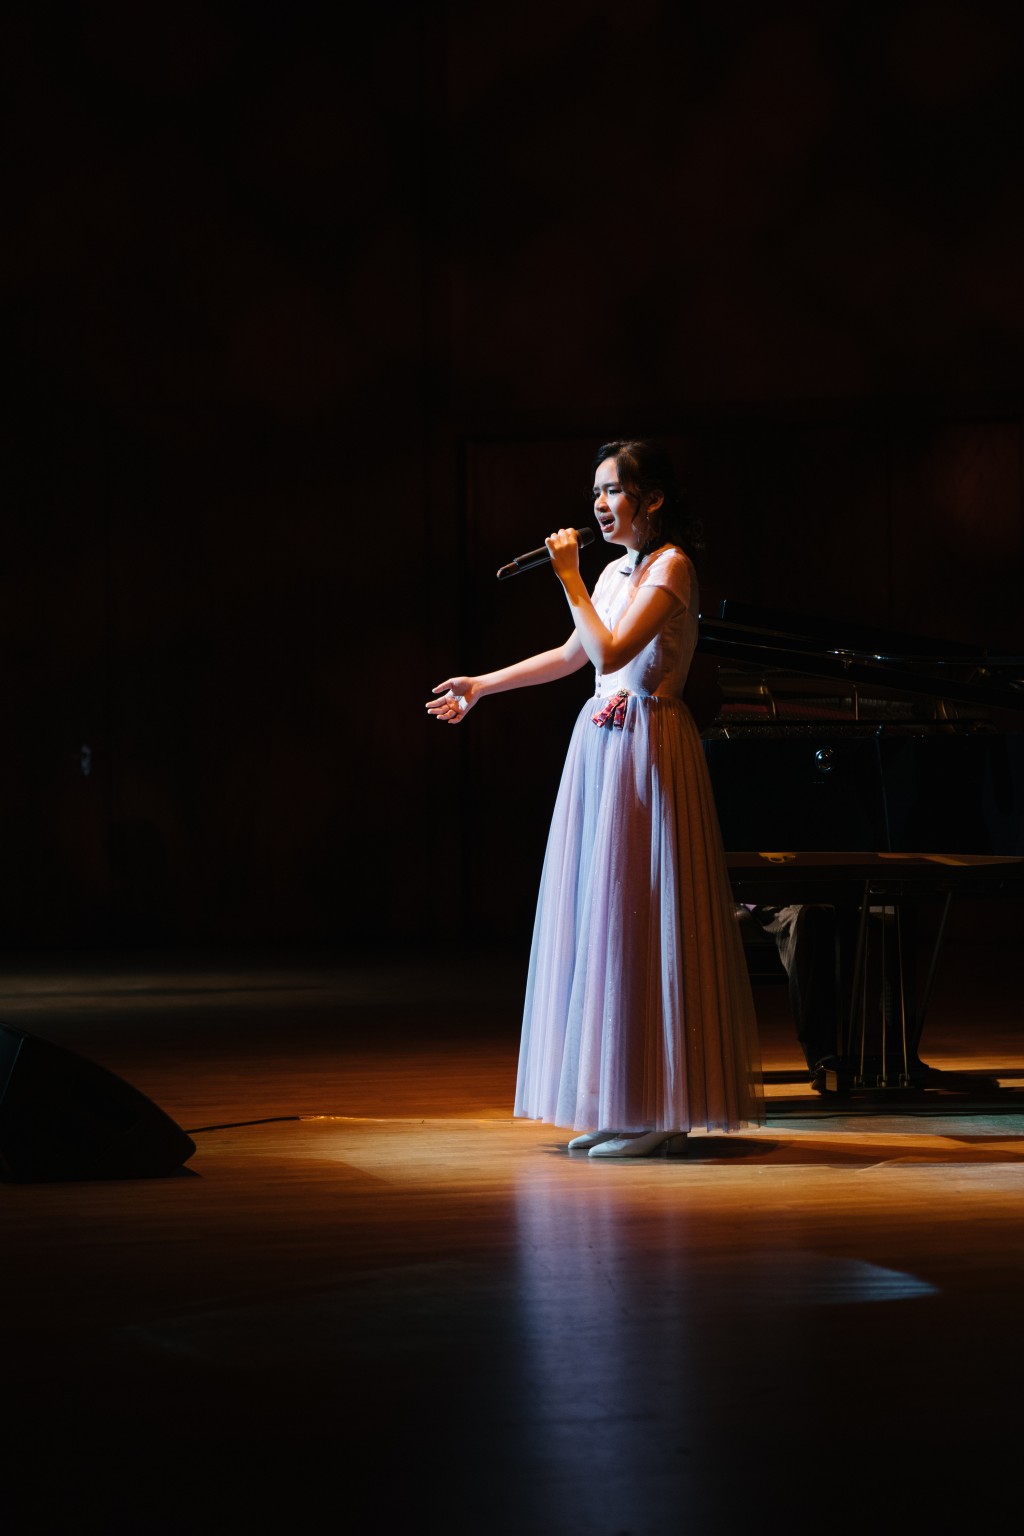 Michelle多次獲得鋼琴和歌唱比賽獎項，2020年更獲選香港十大傑出青年